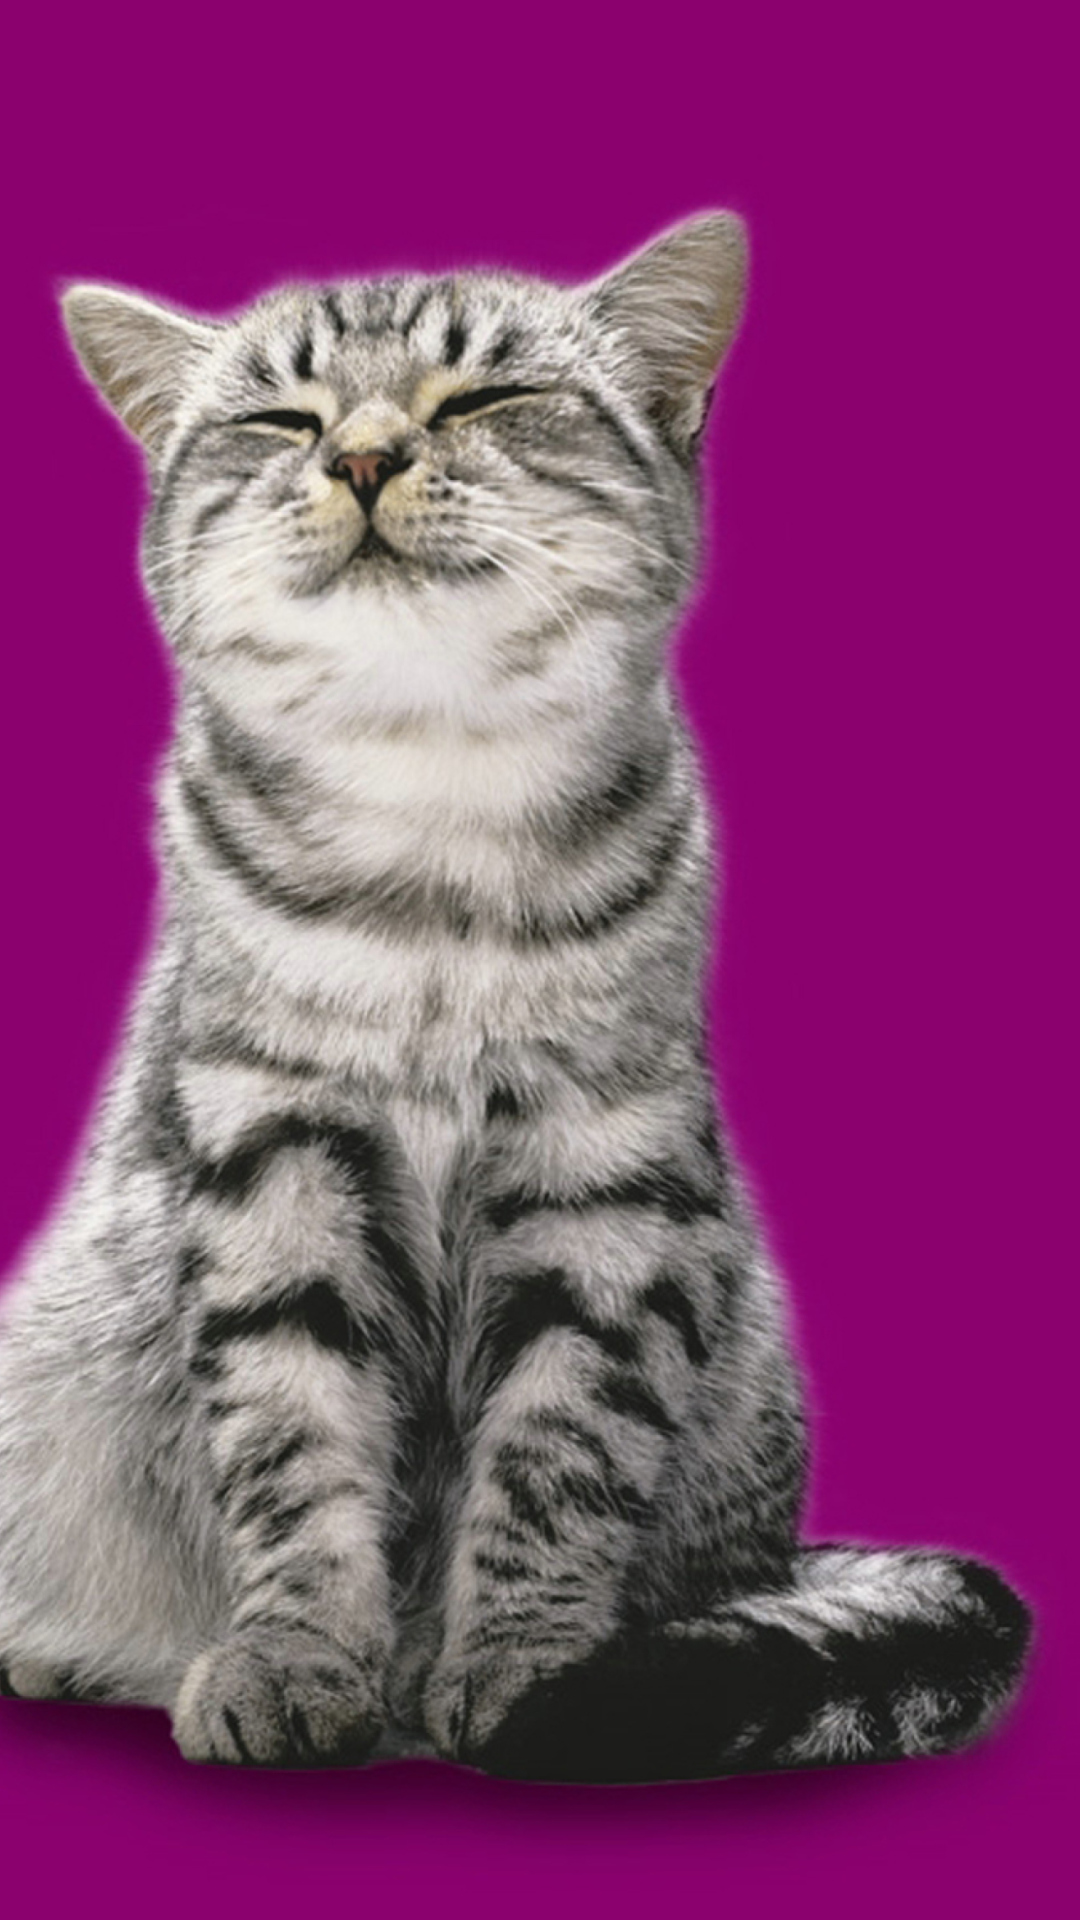 Whiskas Cat wallpaper 1080x1920